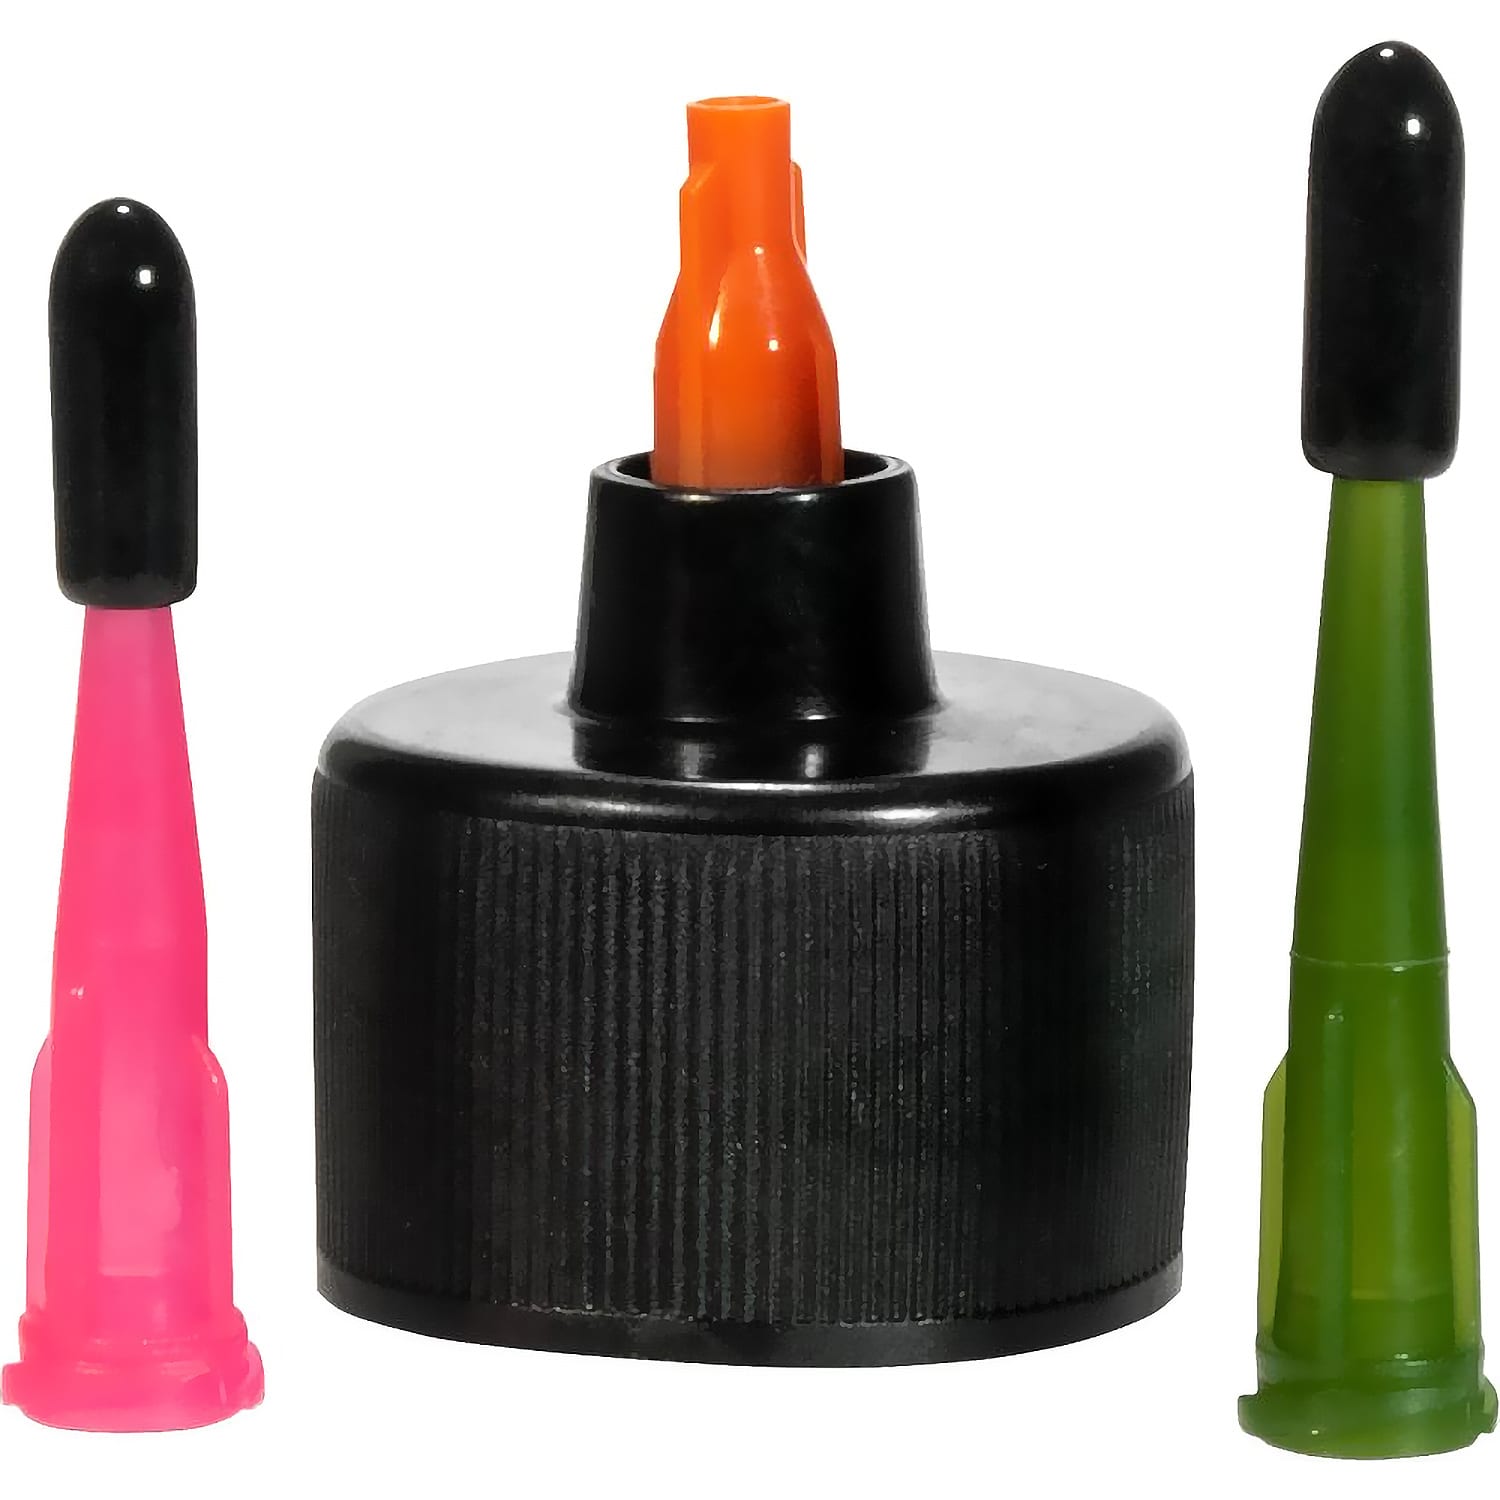 Solarez® Syringe-Cap (Luer Lock) Applicator Tip Kit